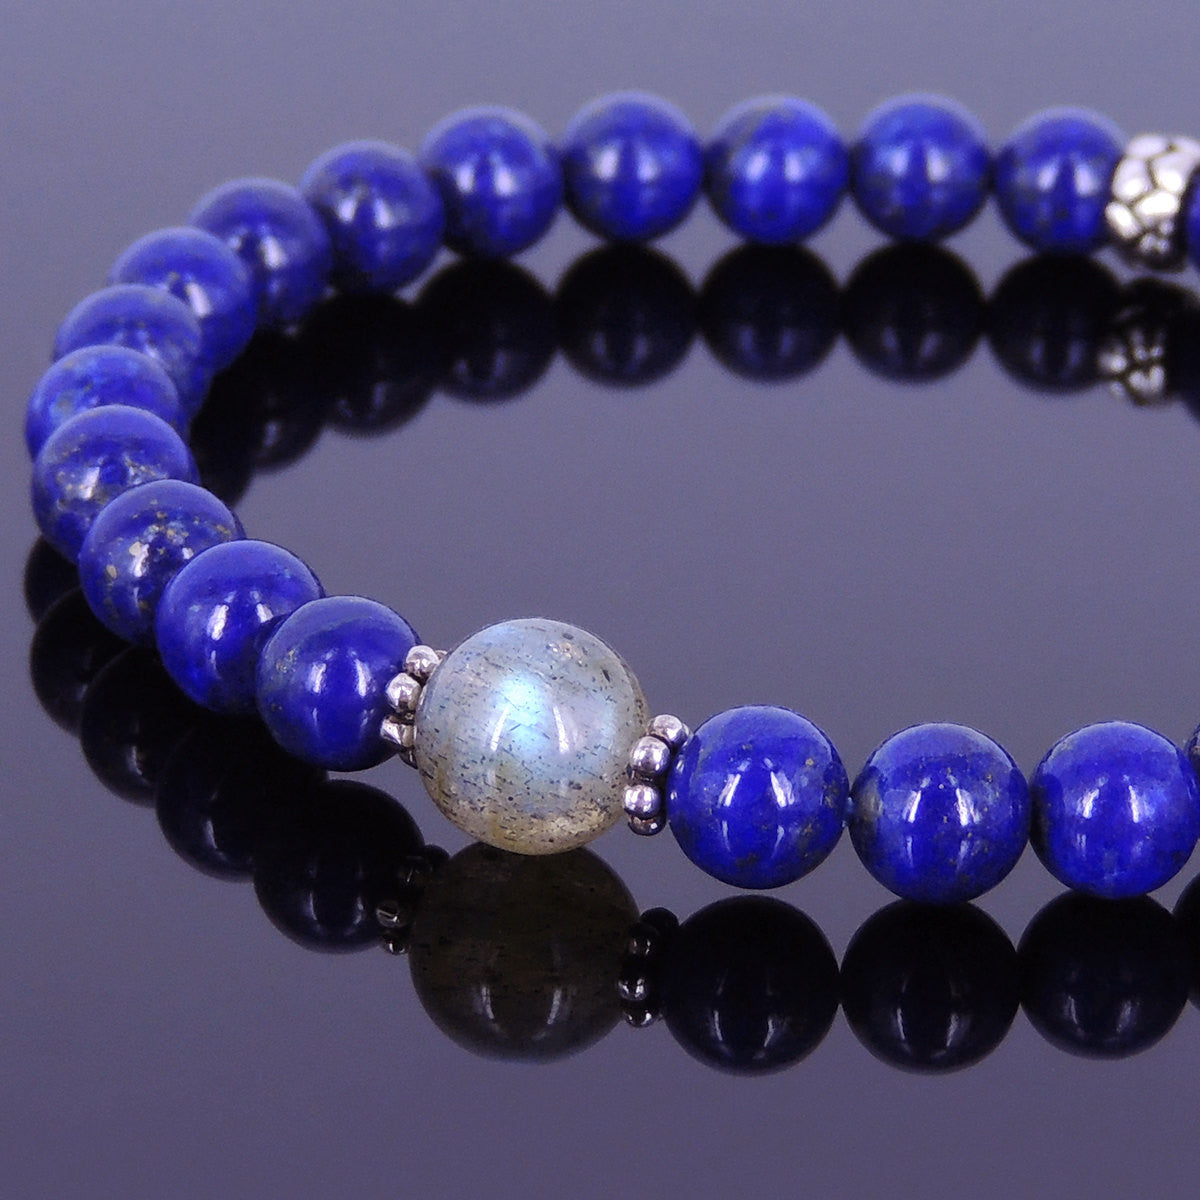 Lapis Lazuli & Labradorite Healing Gemstone Bracelet with S925 Sterling Silver Spacer Beads - Handmade by Gem & Silver BR019